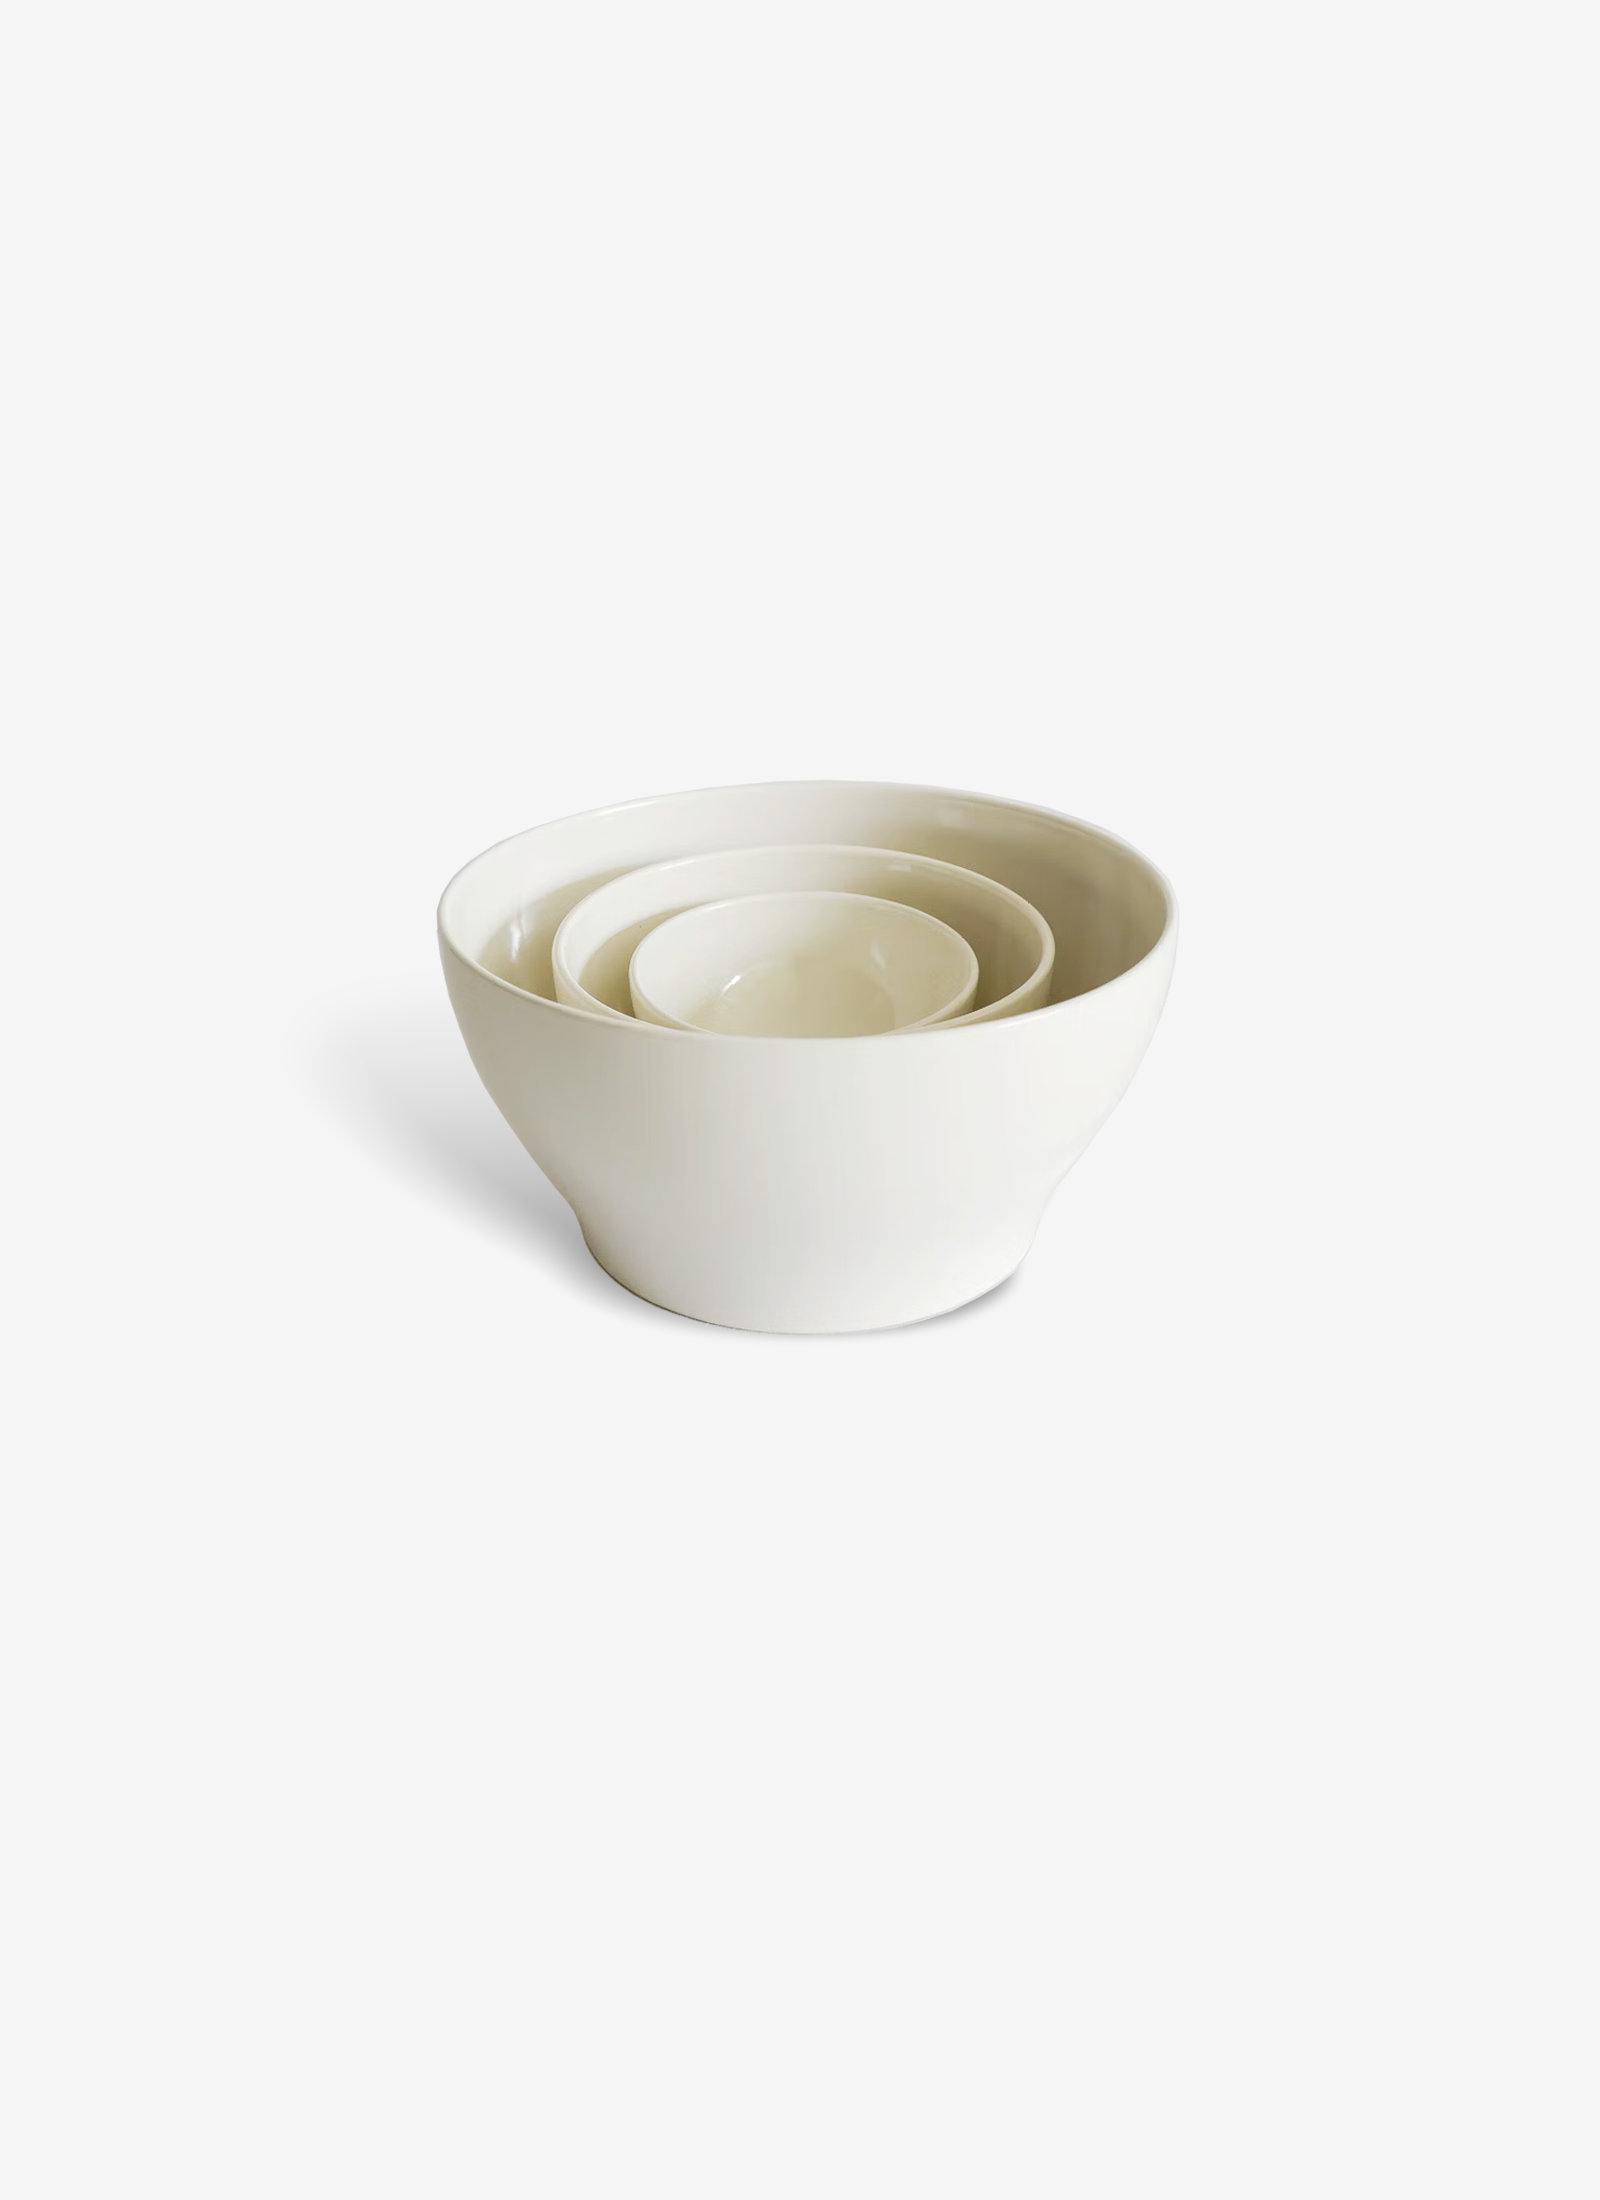 Ceramic Bowls by John Pawson - Set of 3